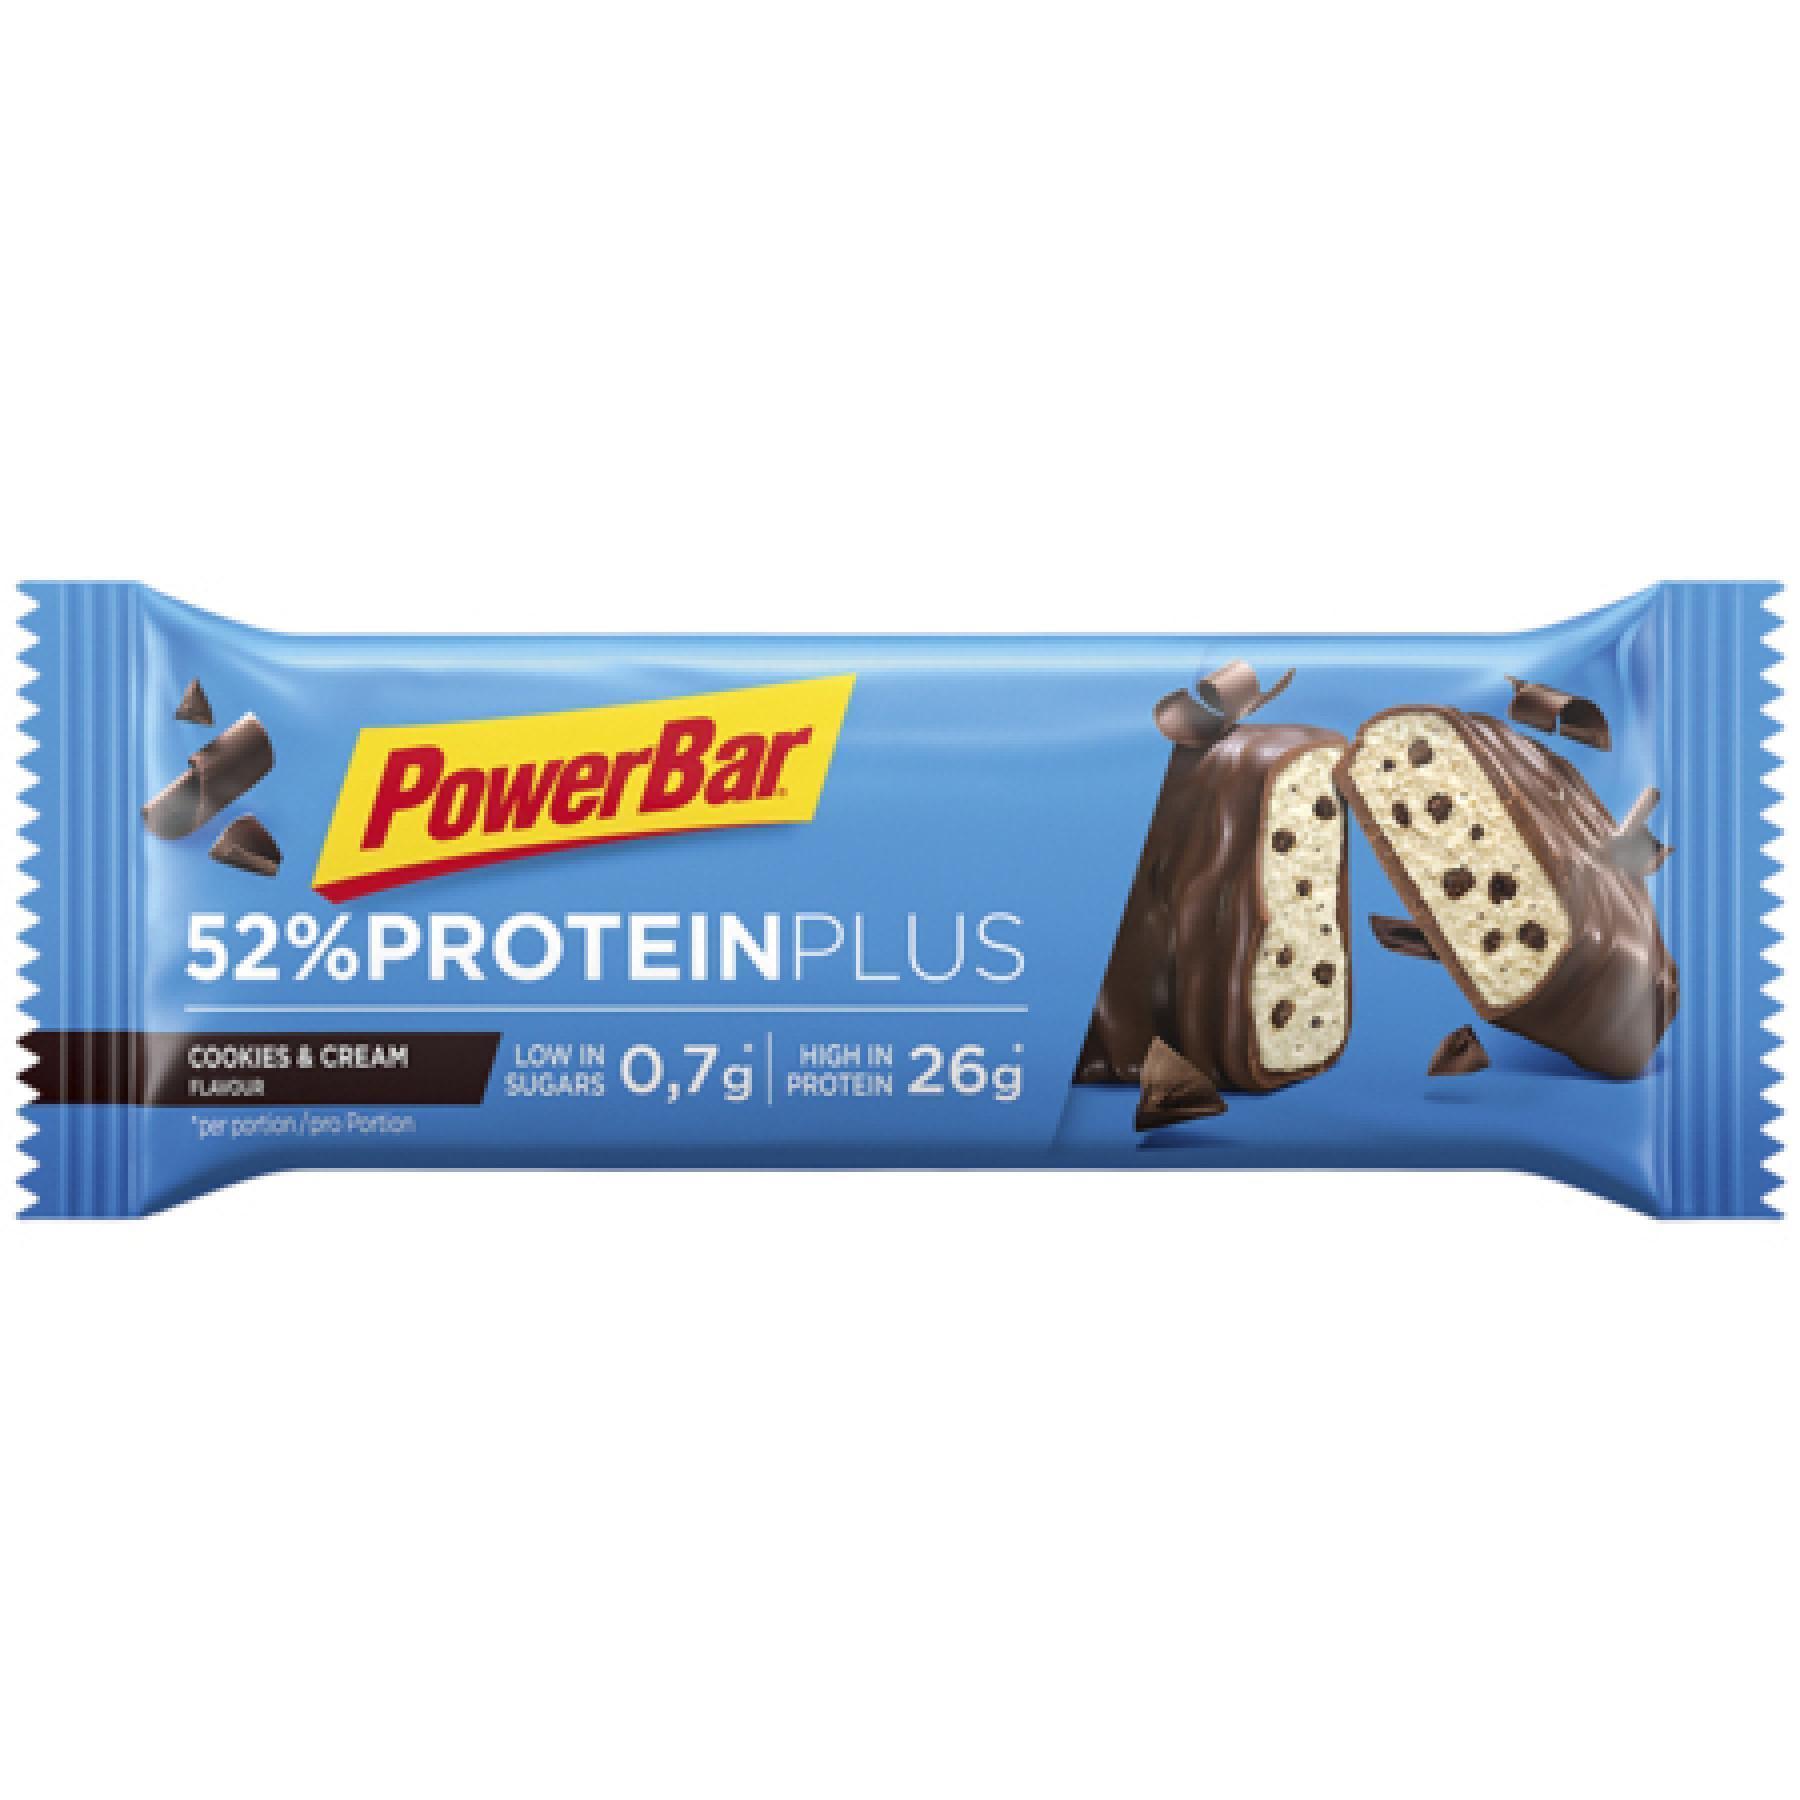 Pacote de 20 barras PowerBar 52% ProteinPlus Low Sugar Cookies & Cream